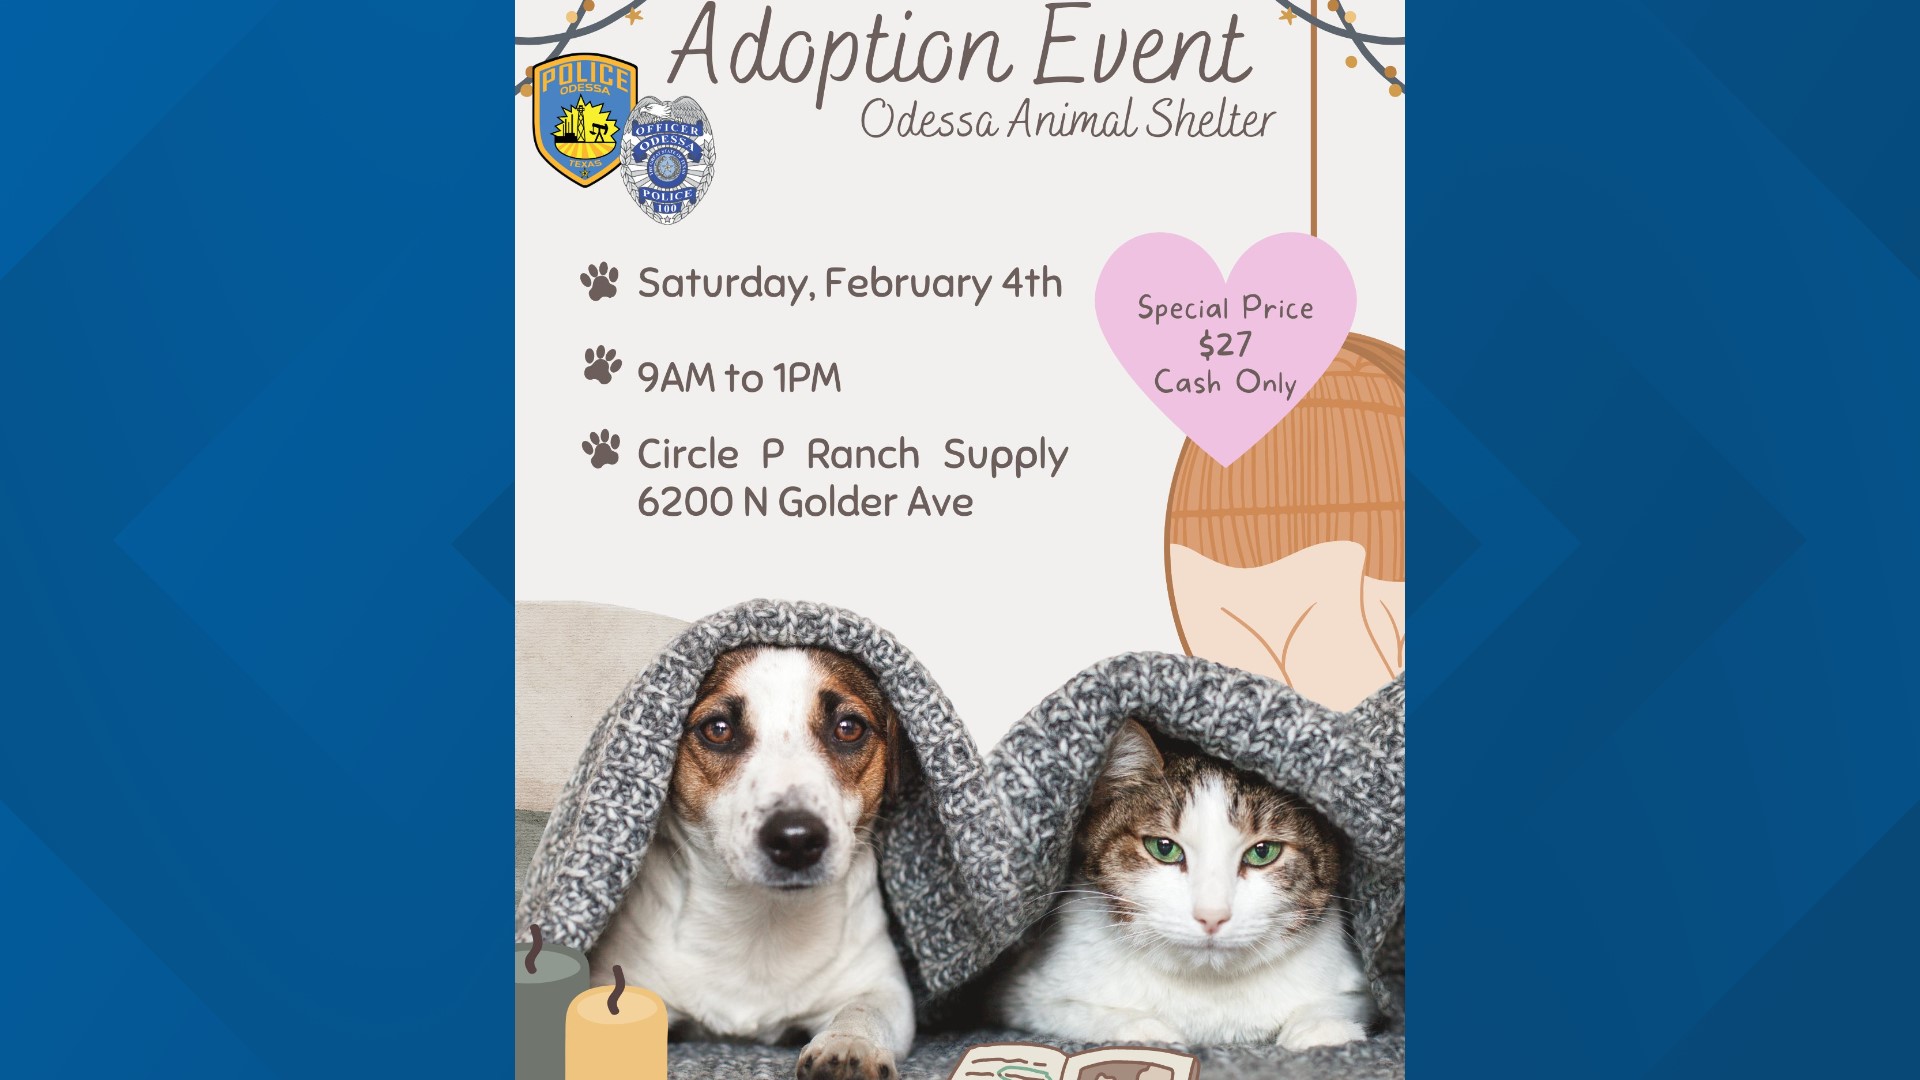 Odessa Animal Shelter to host adoption event on February 4 